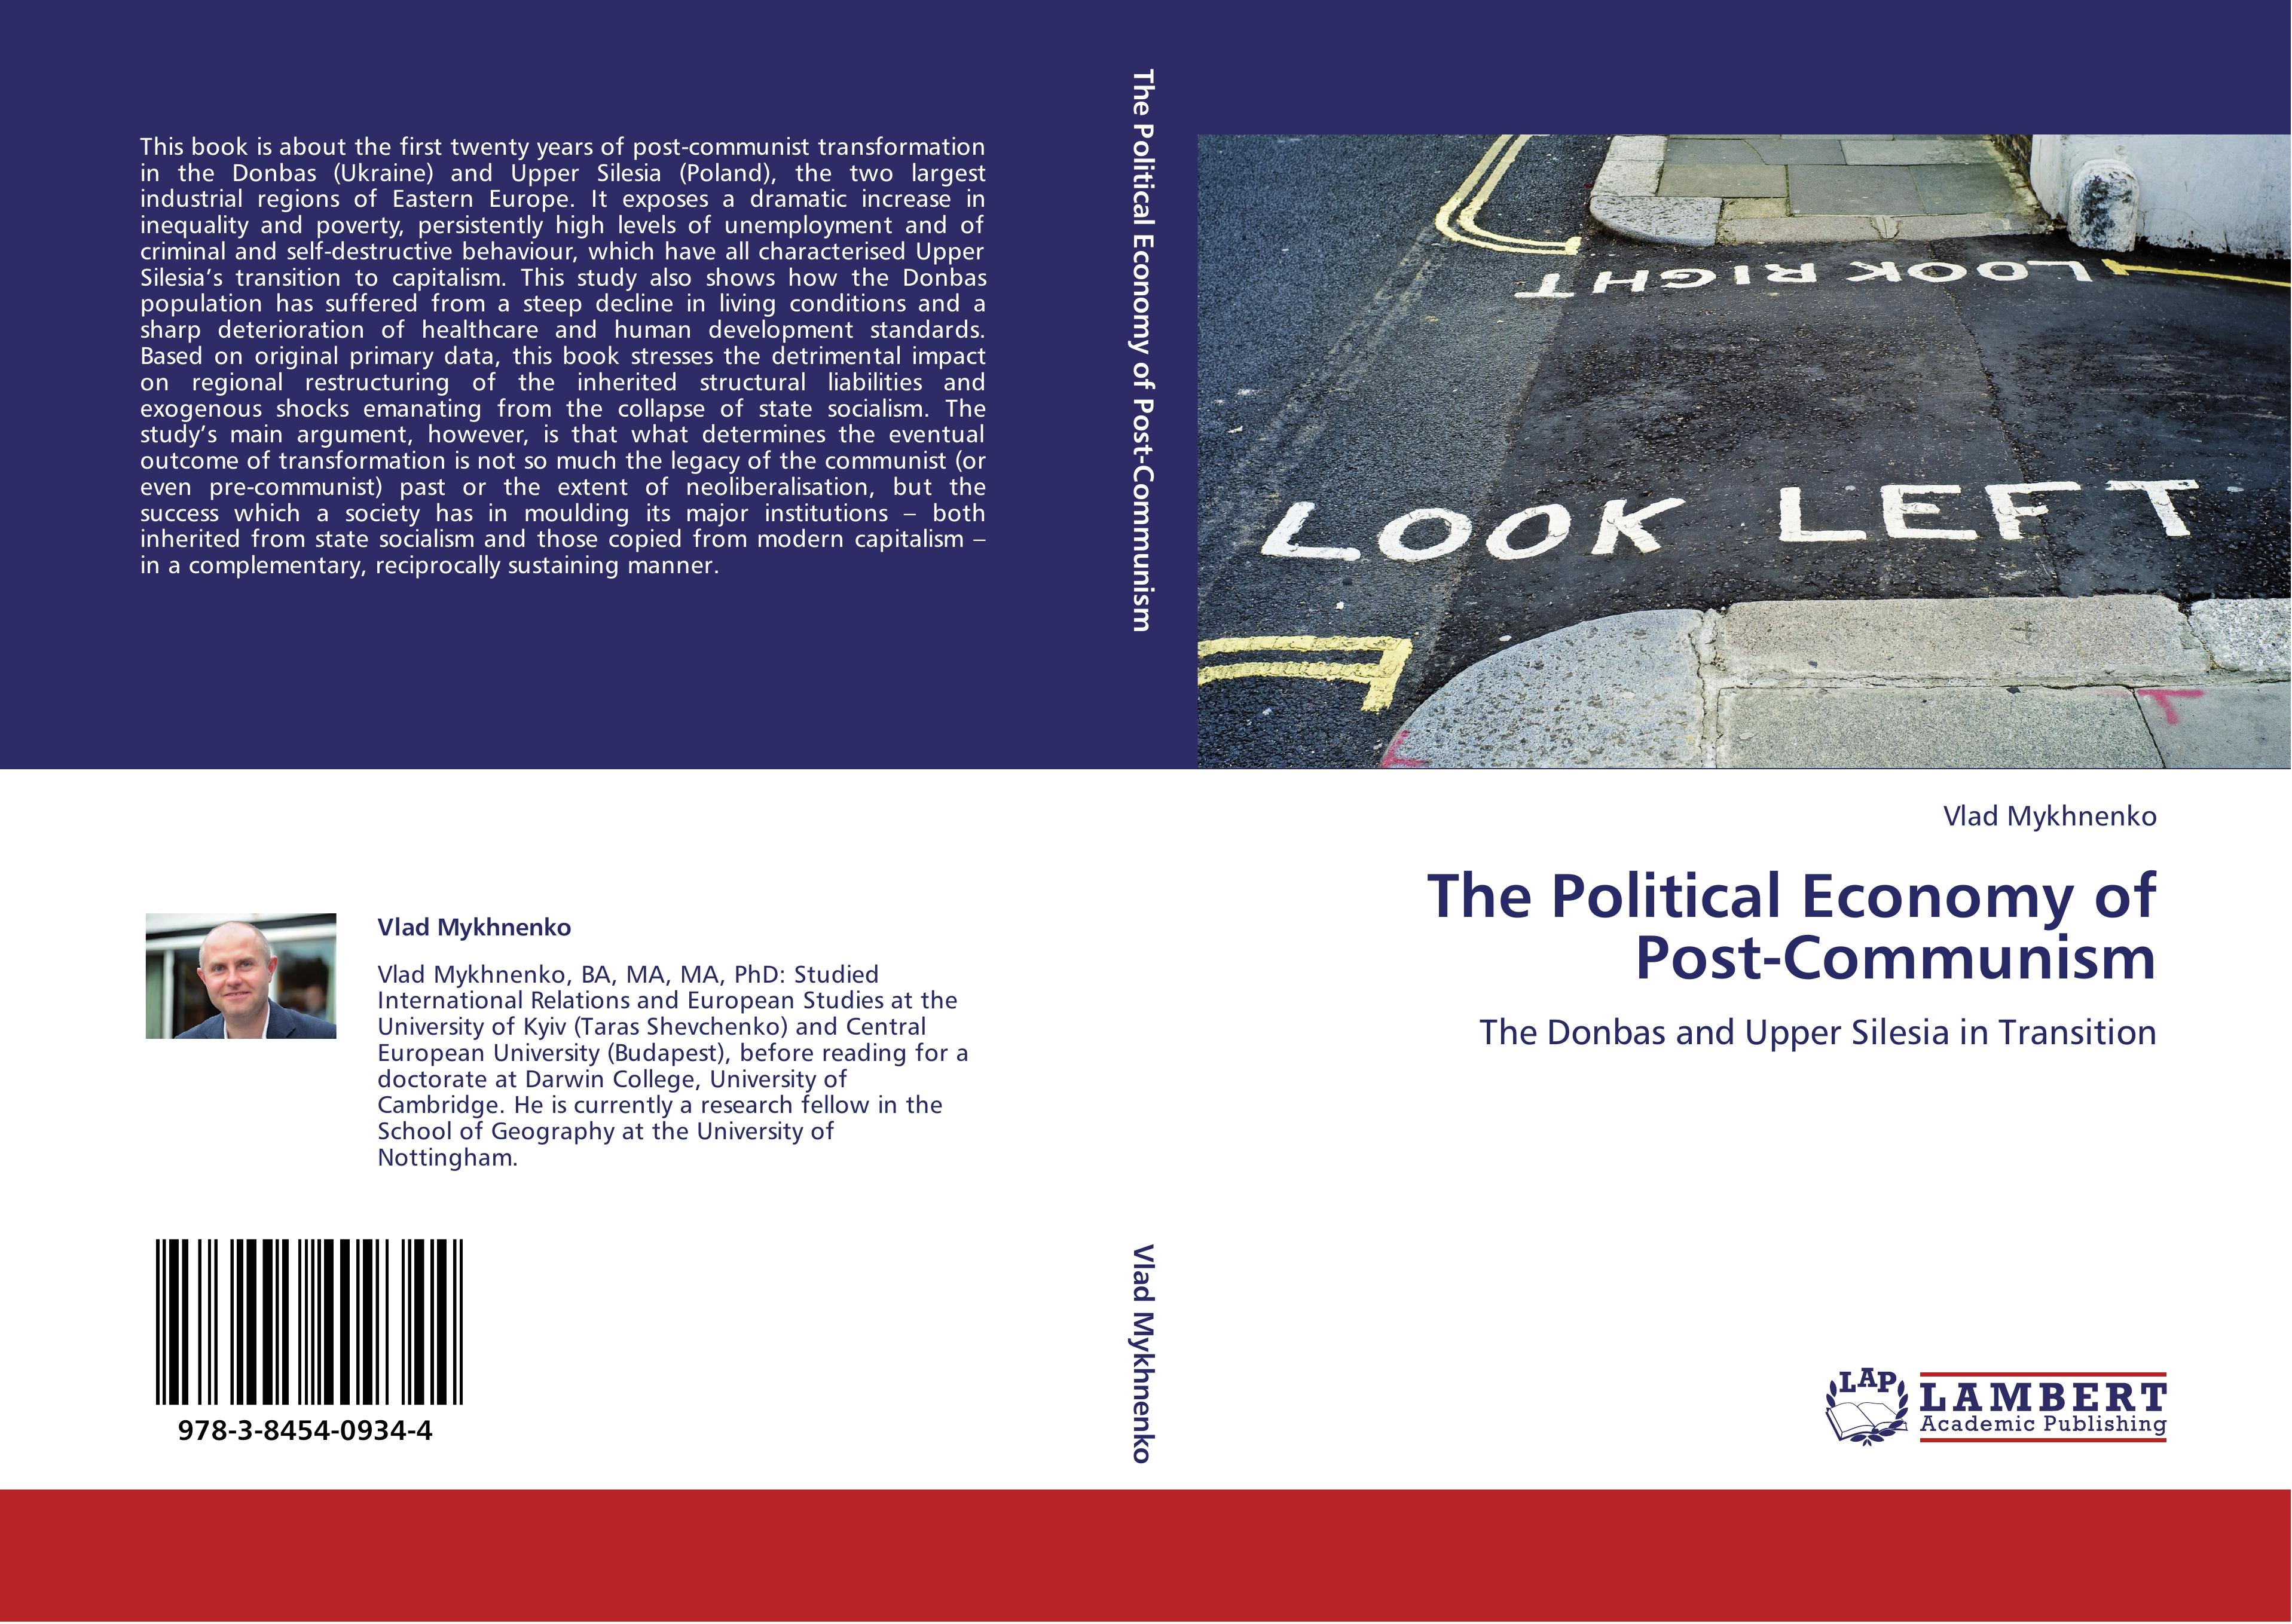 The Political Economy of Post-Communism - Vlad Mykhnenko